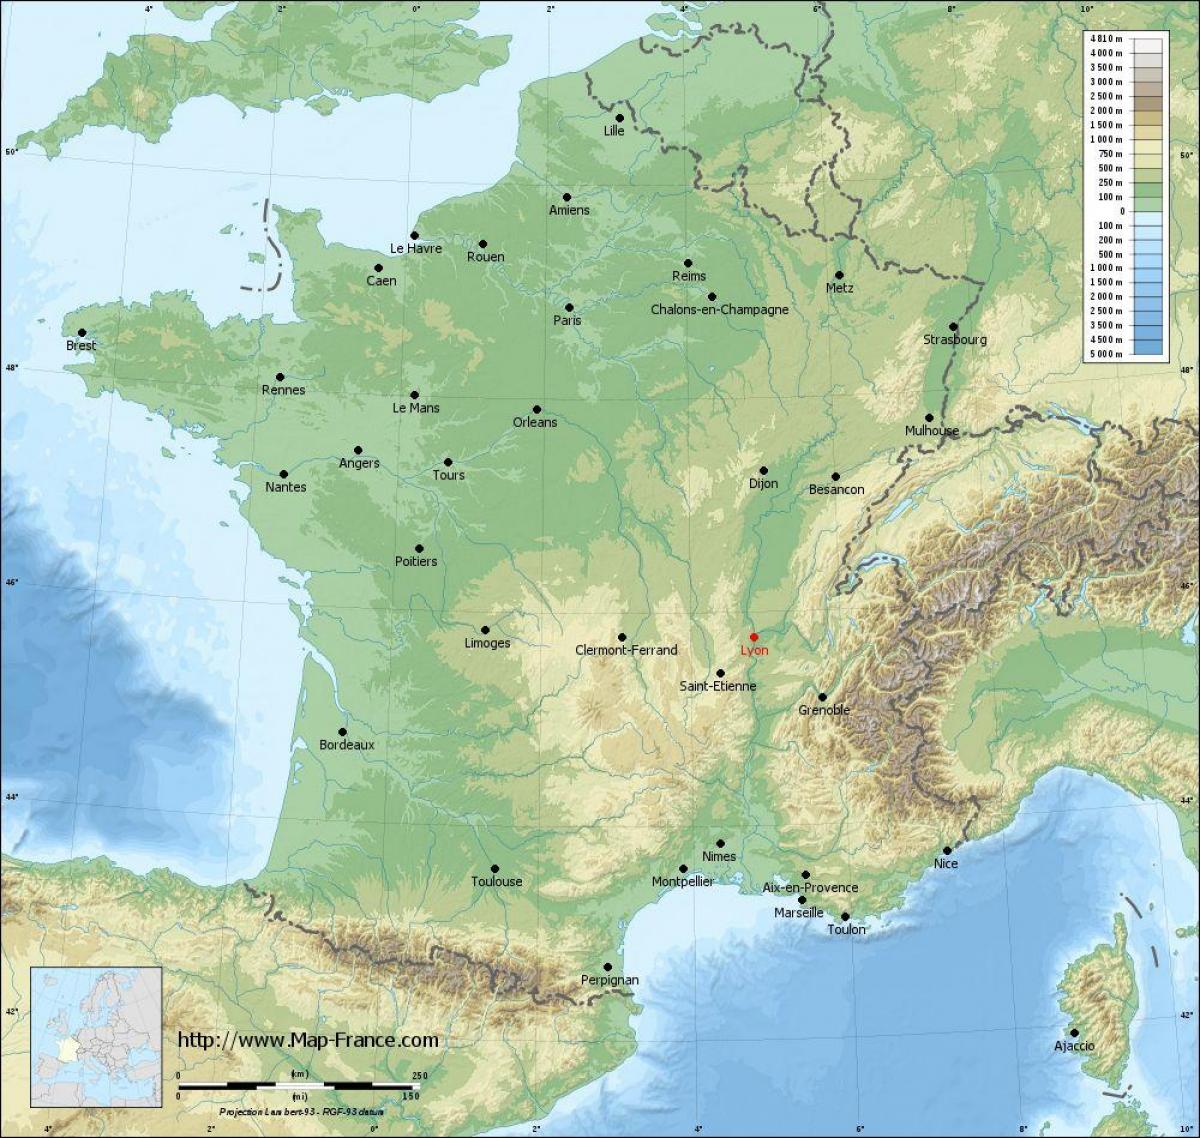 lyon karta Lyon kartice   Lyon, Francuska karta grada (Auvergne Rhône Alpes  lyon karta